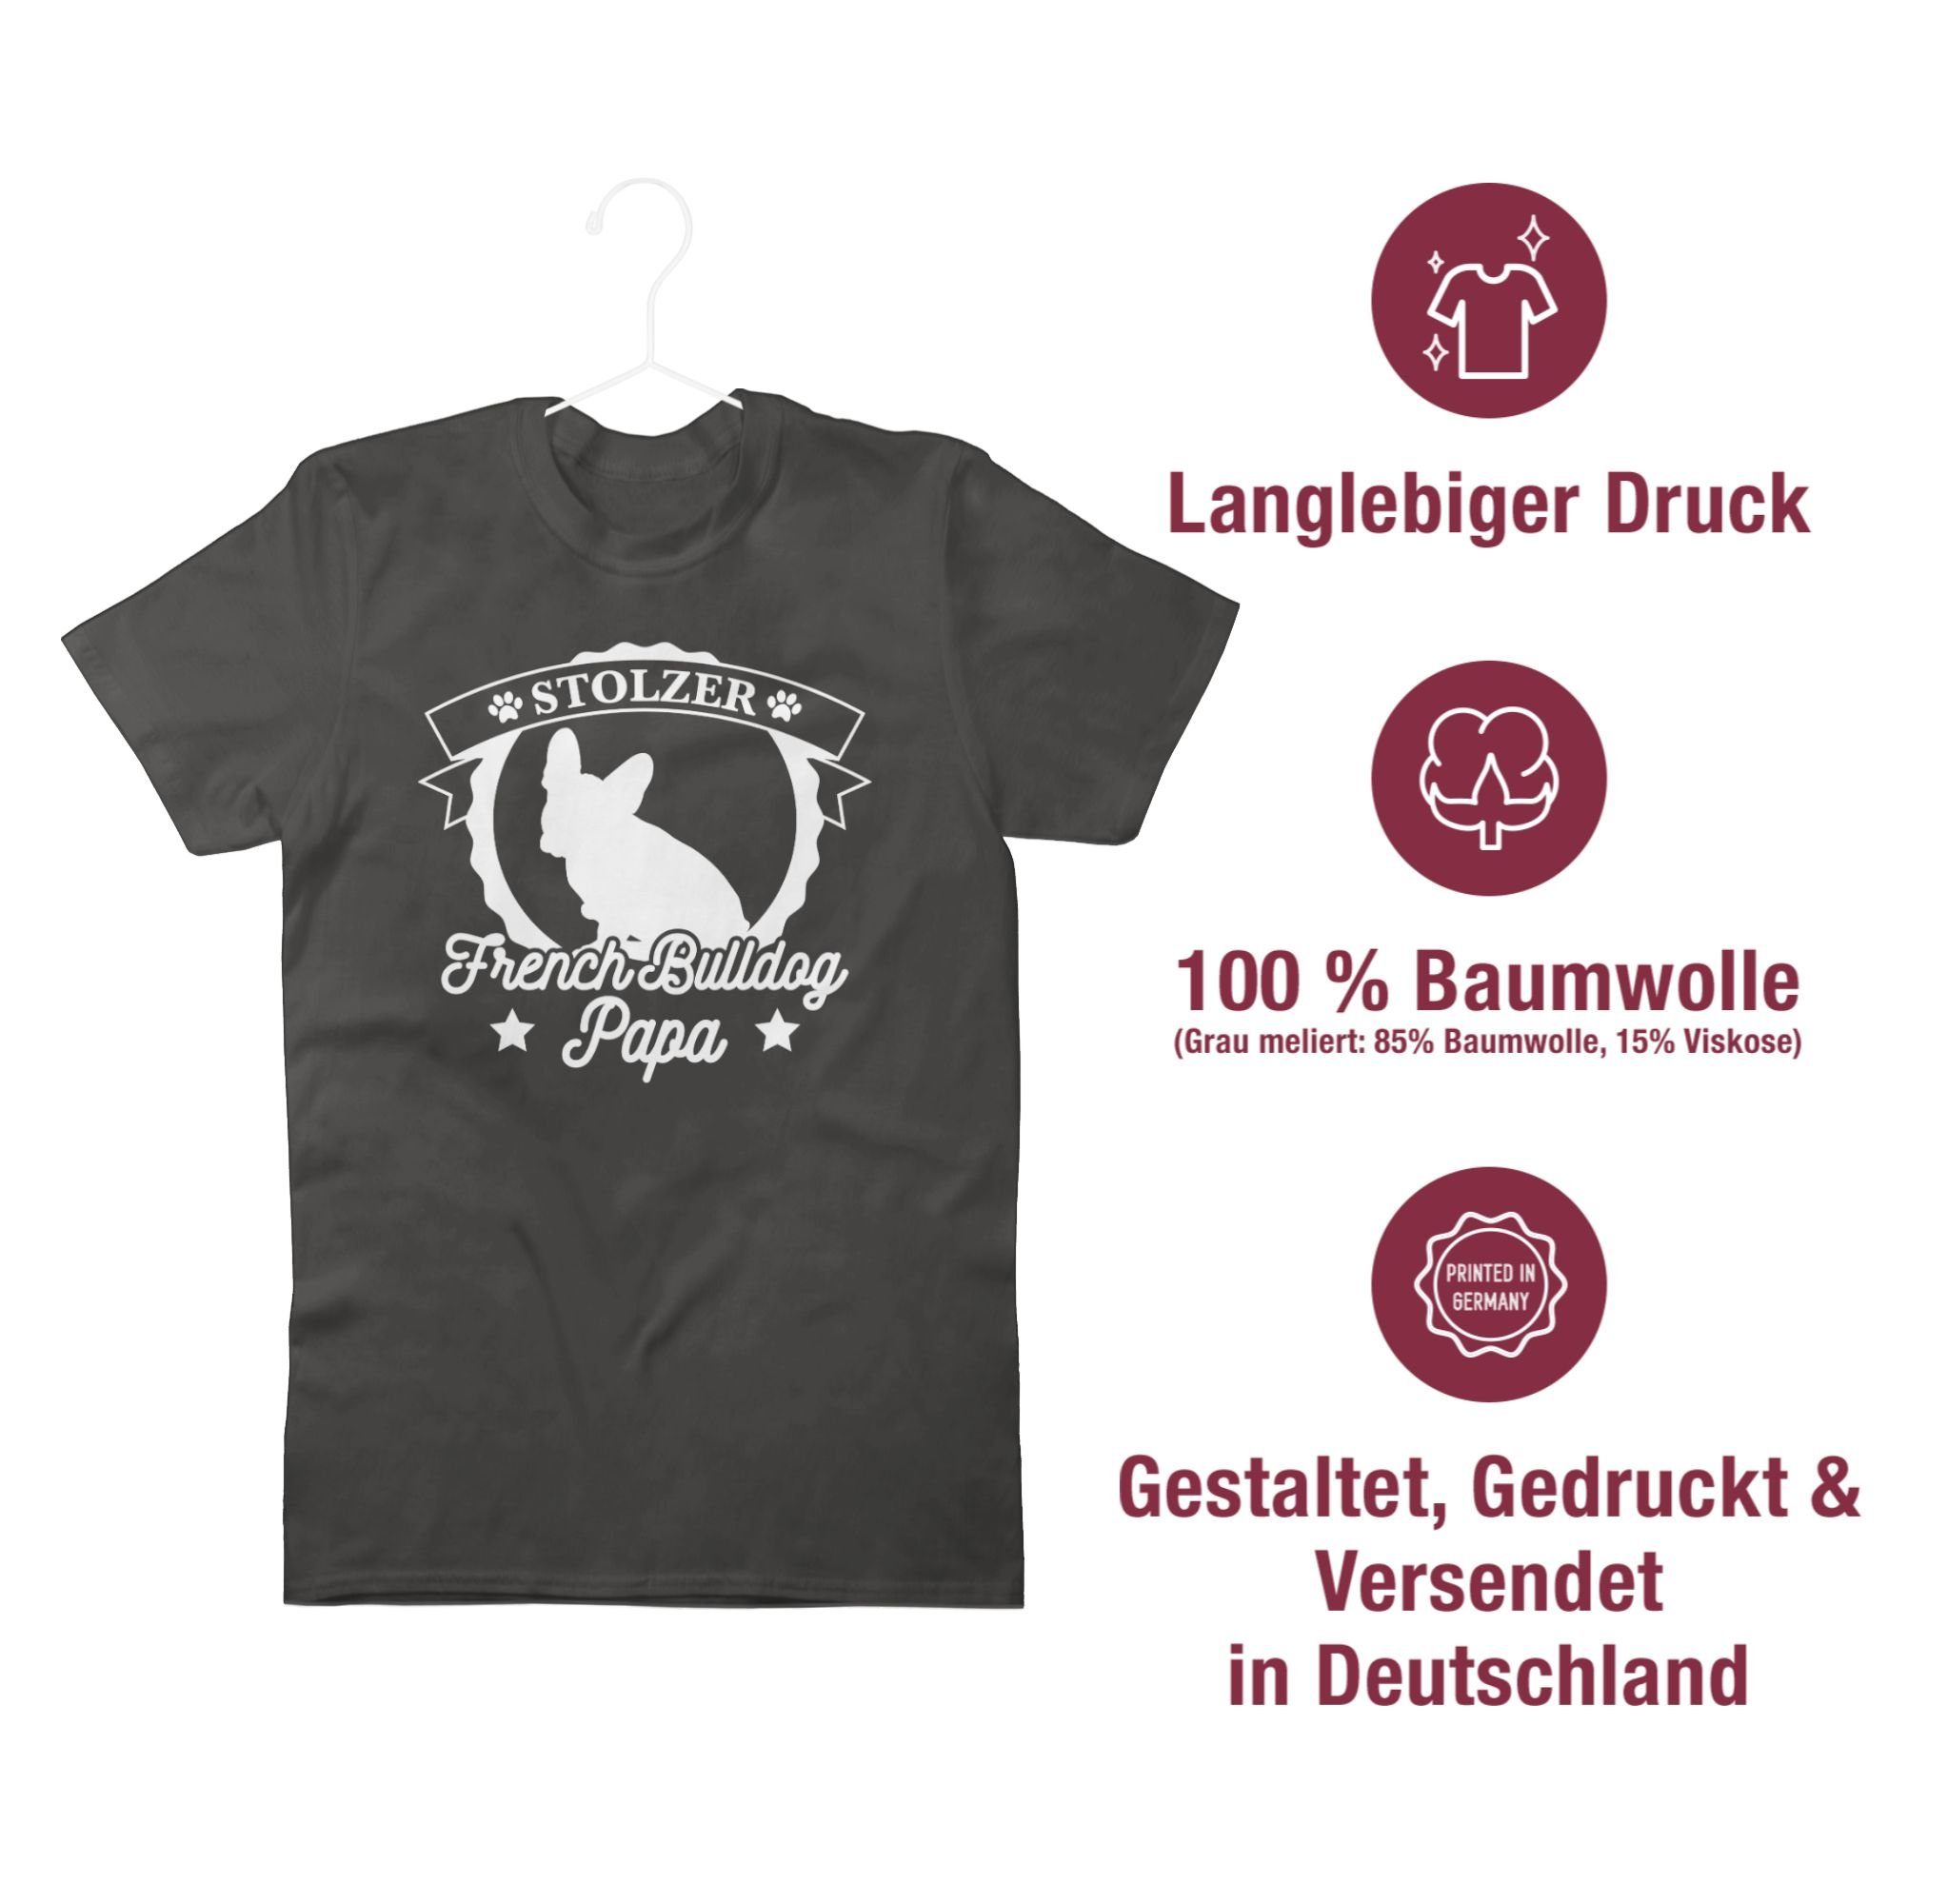 Shirtracer T-Shirt Bulldog Dunkelgrau für Geschenk French Papa Stolzer Hundebesitzer 2